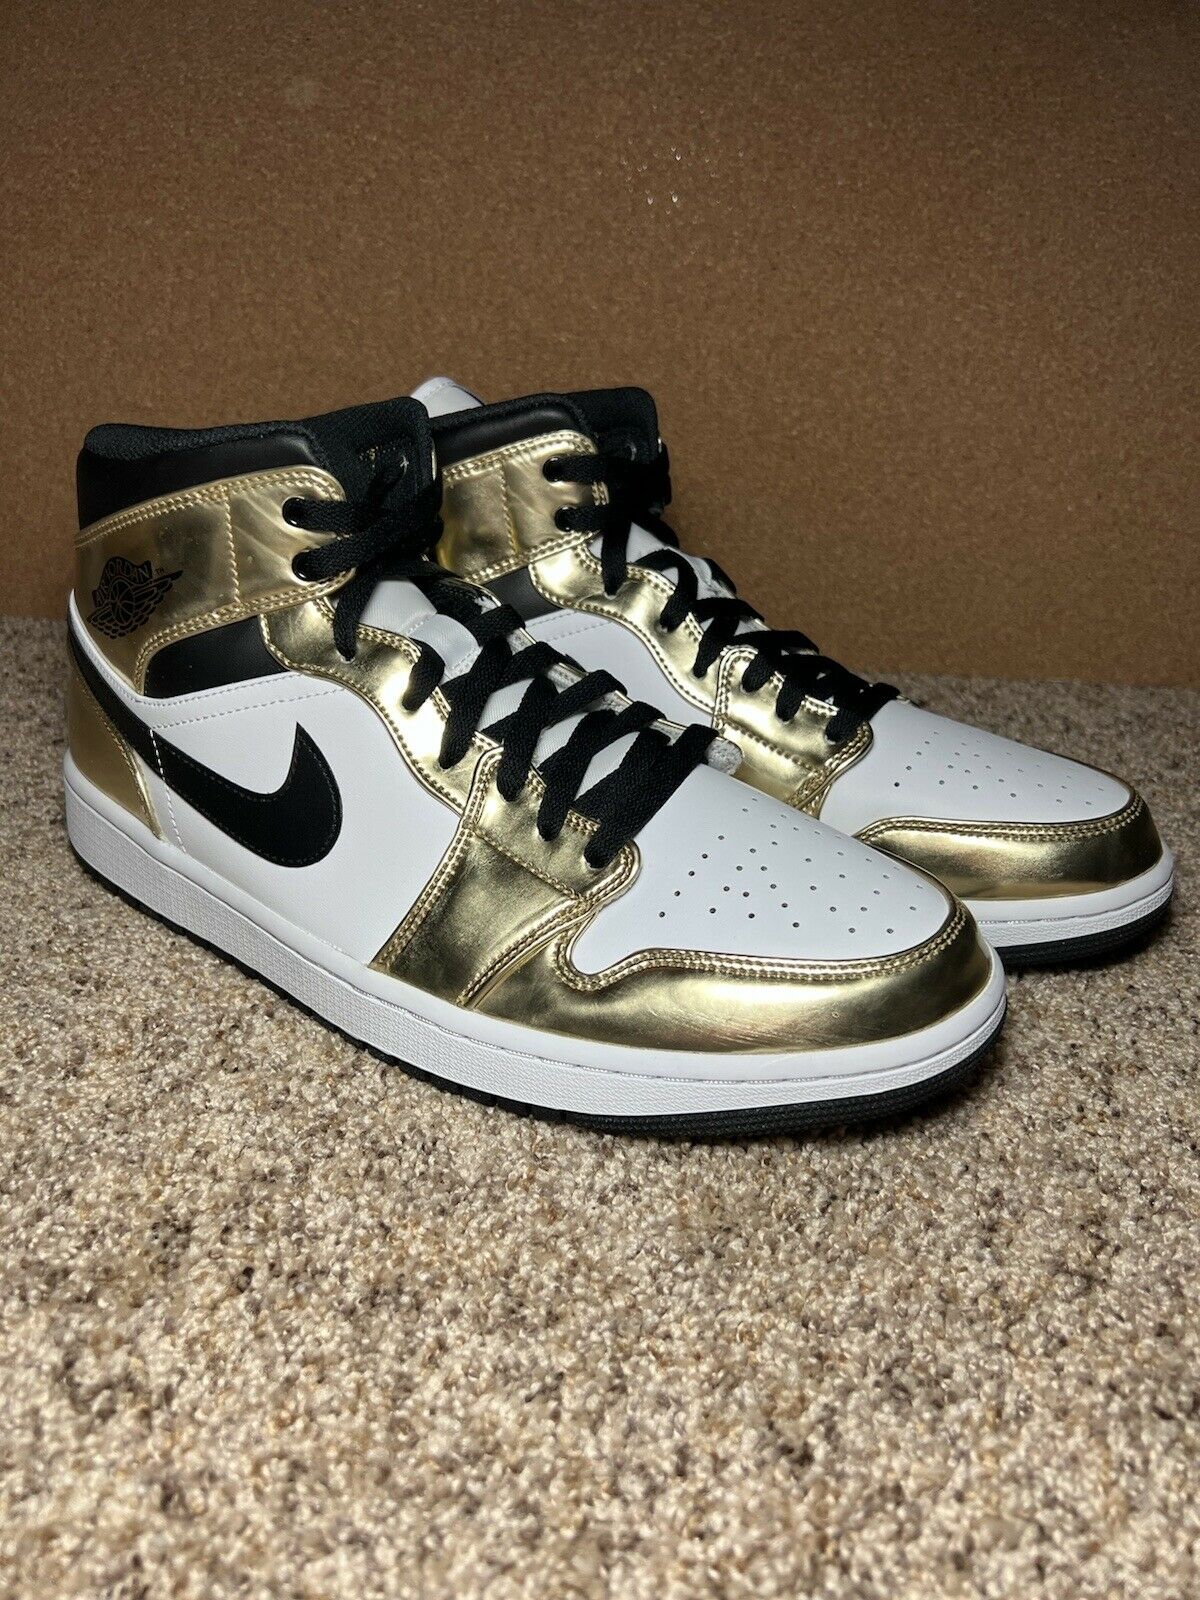 Nike Air Jordan 1 Mid Metallic Gold Black White Shoes Gym DC1419700 Size 12 New